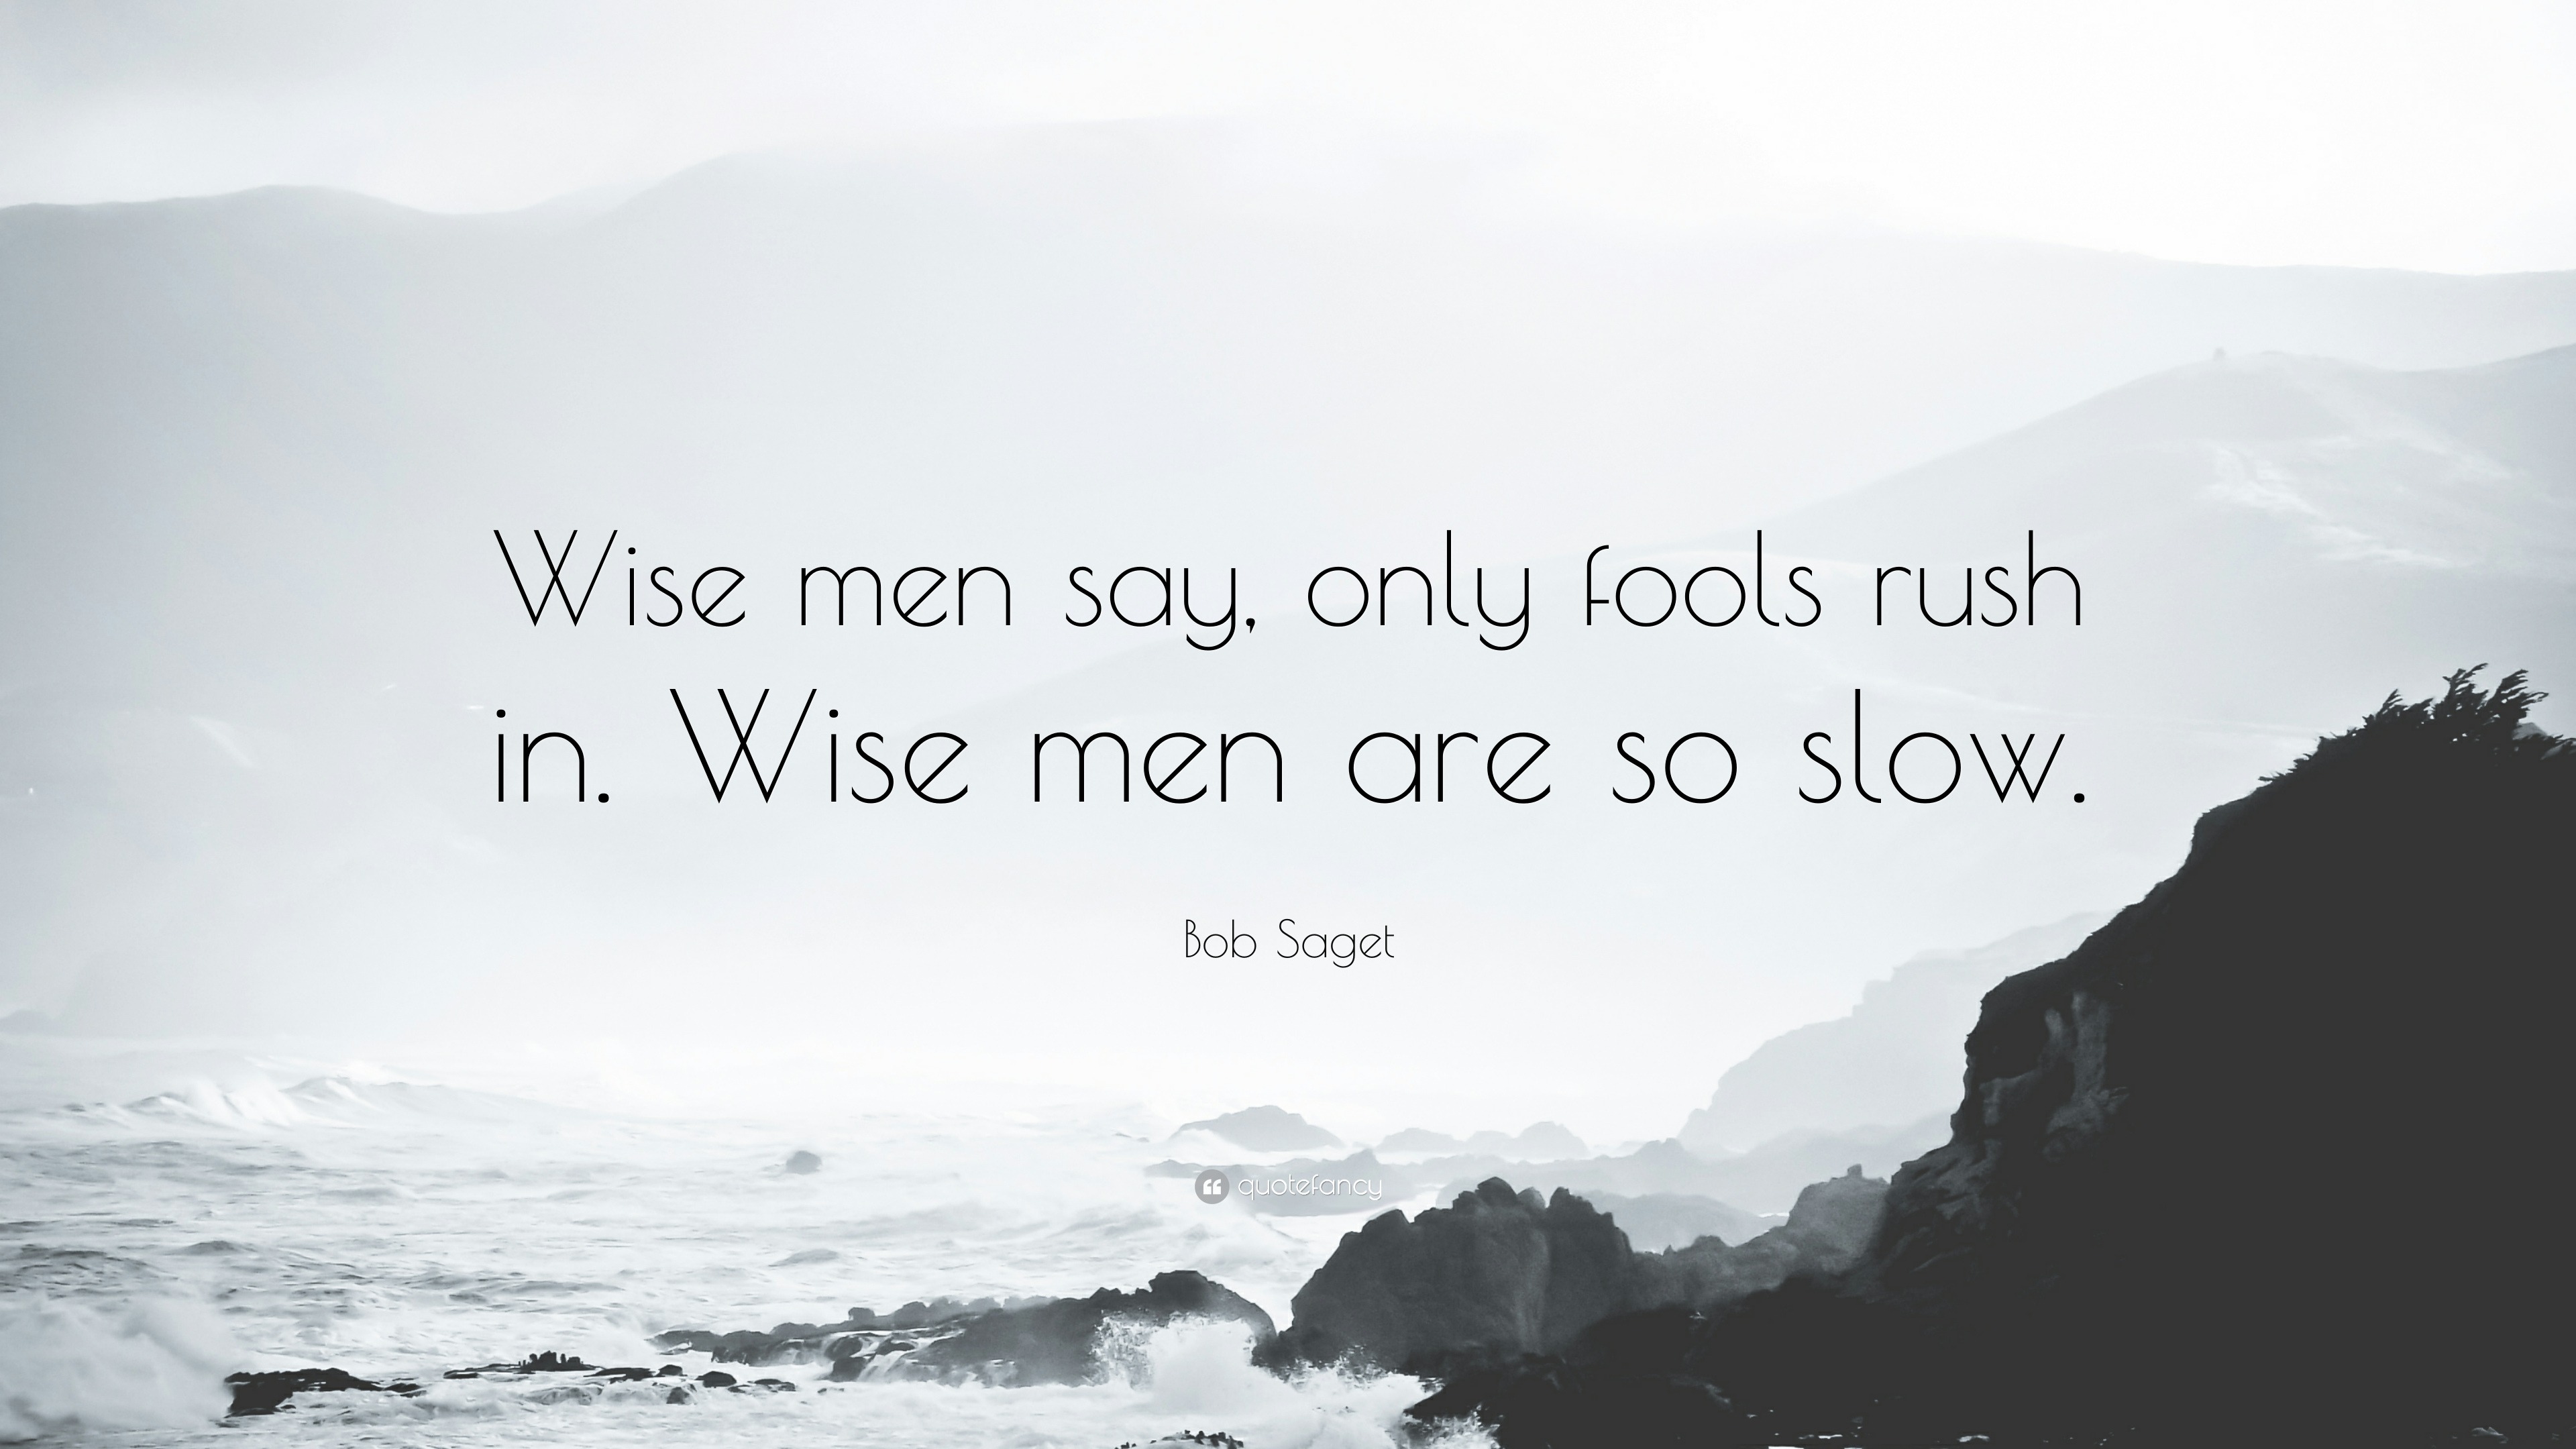 wise men say